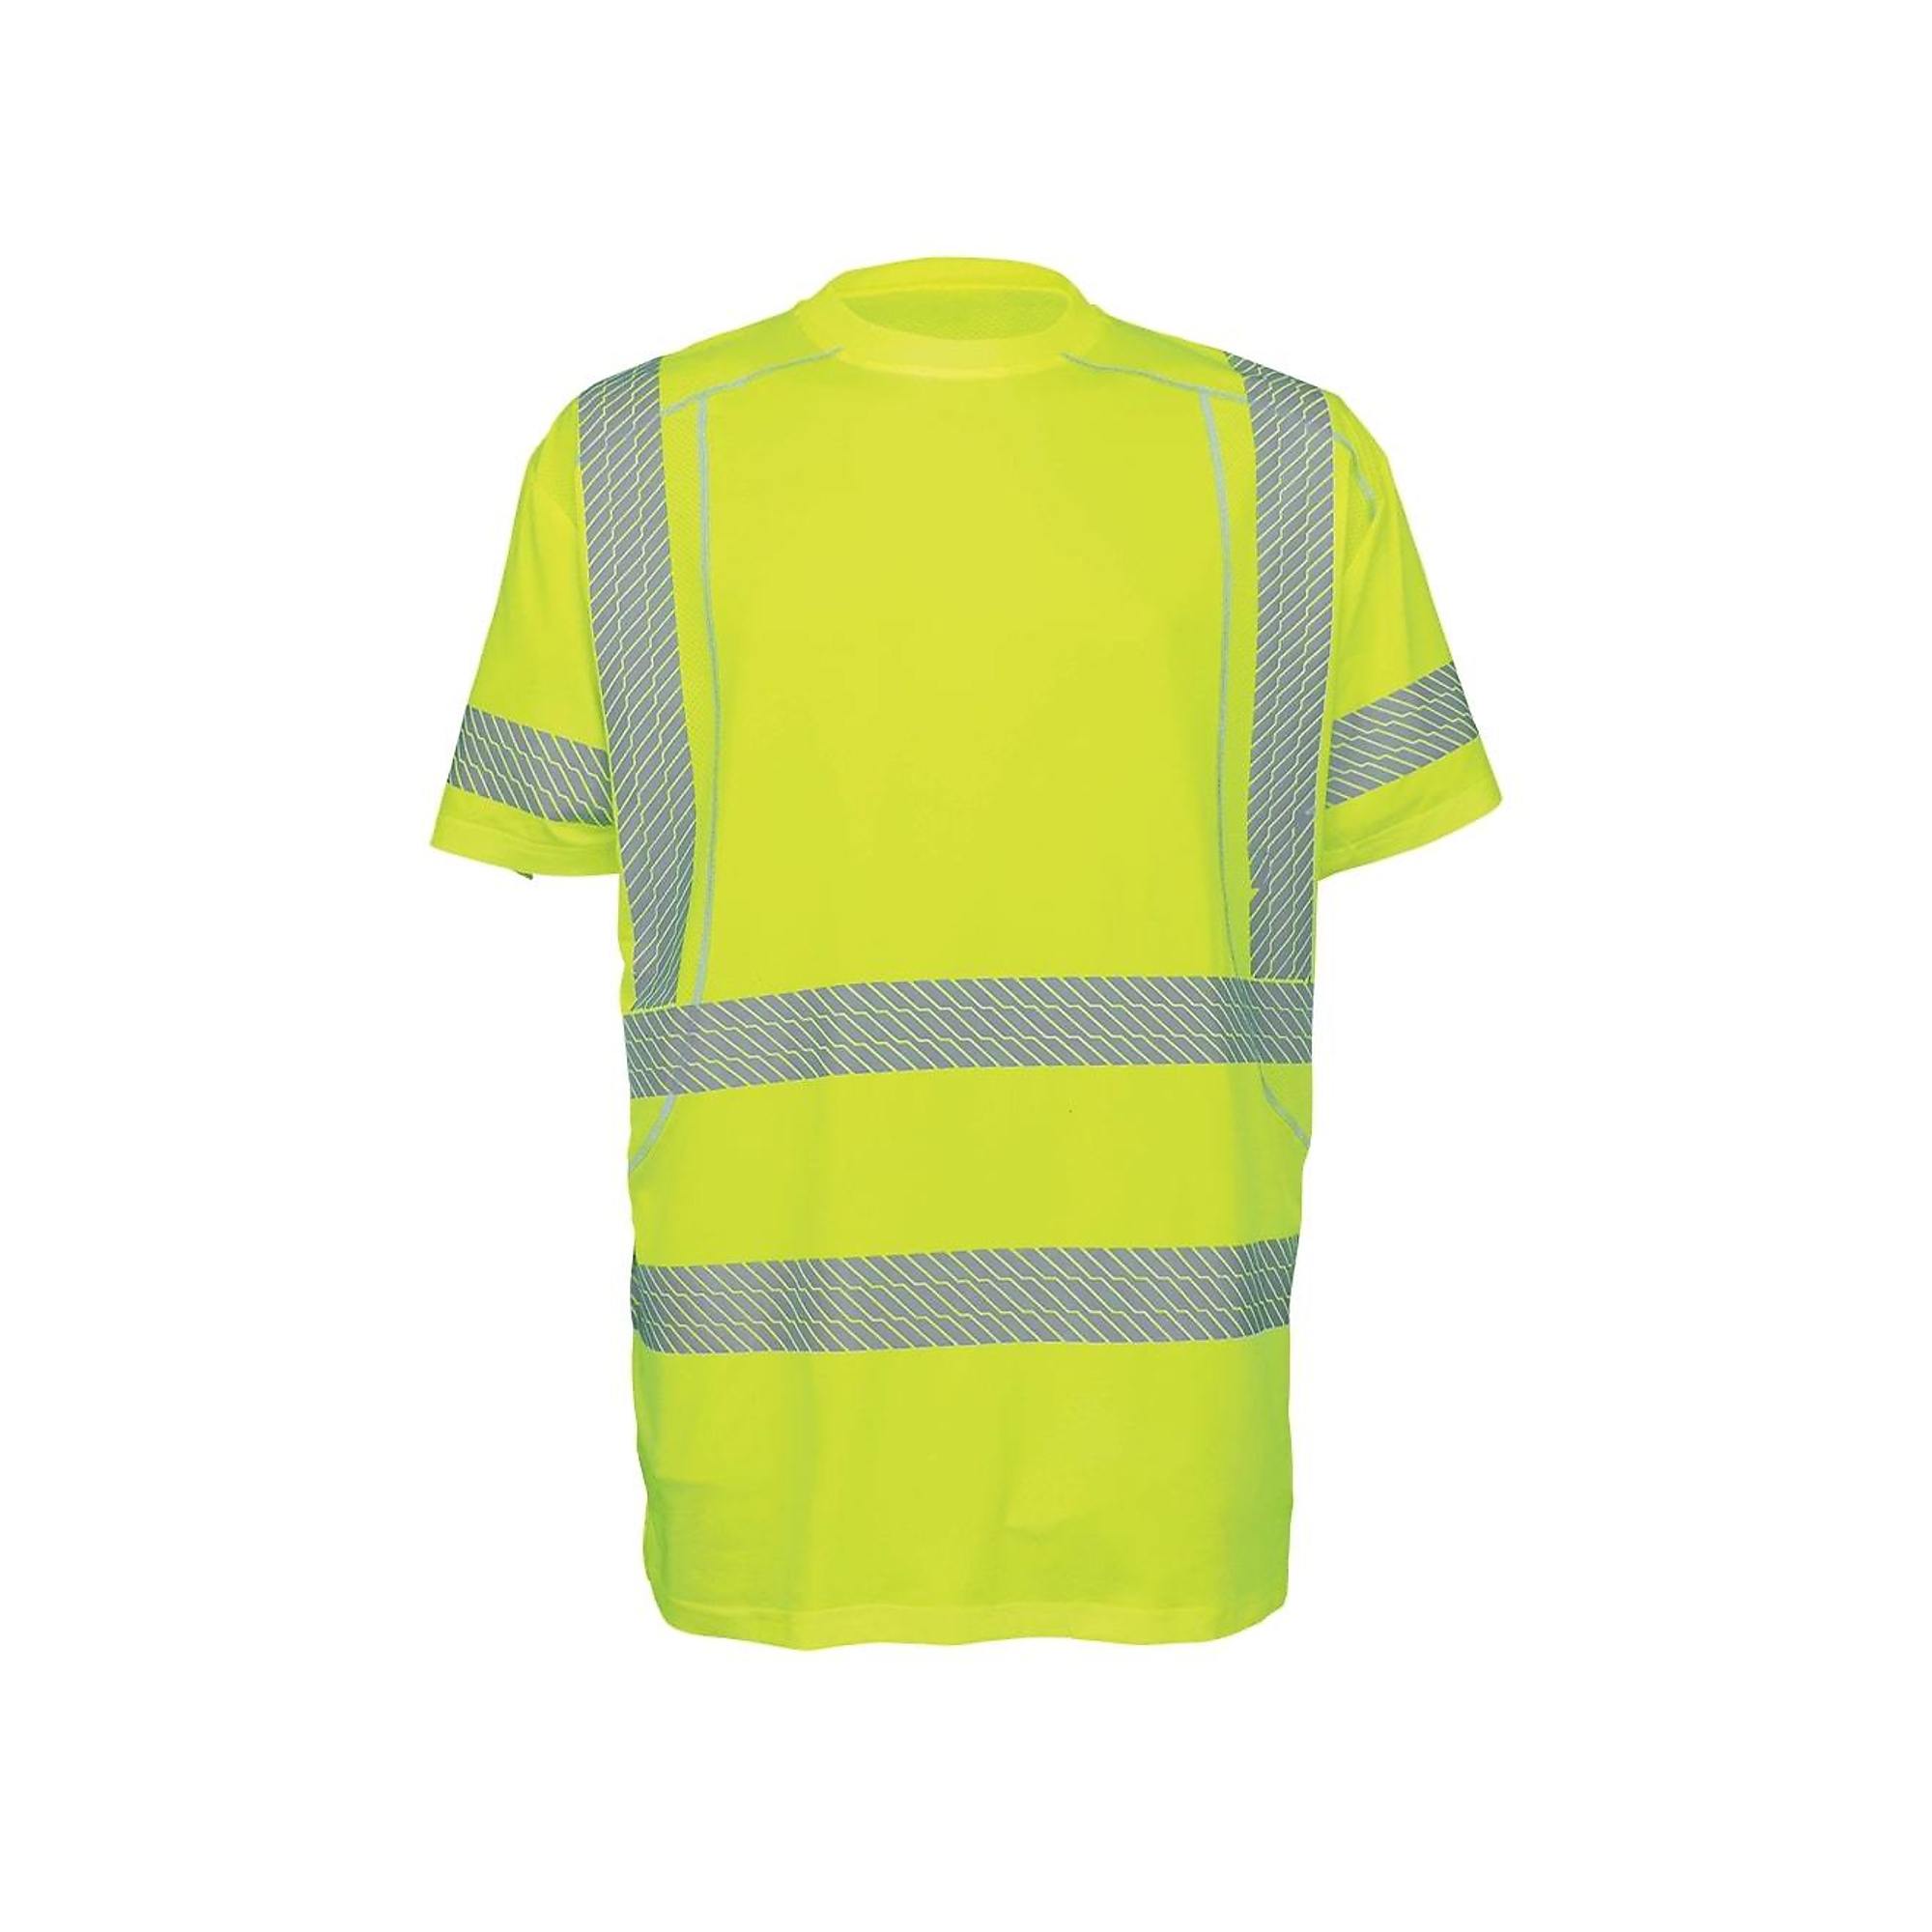 FrogWear, HV Yellow/Green, Class 3 Self-Wicking, Athletic Shirt, Size XL, Model GLO-205-XL